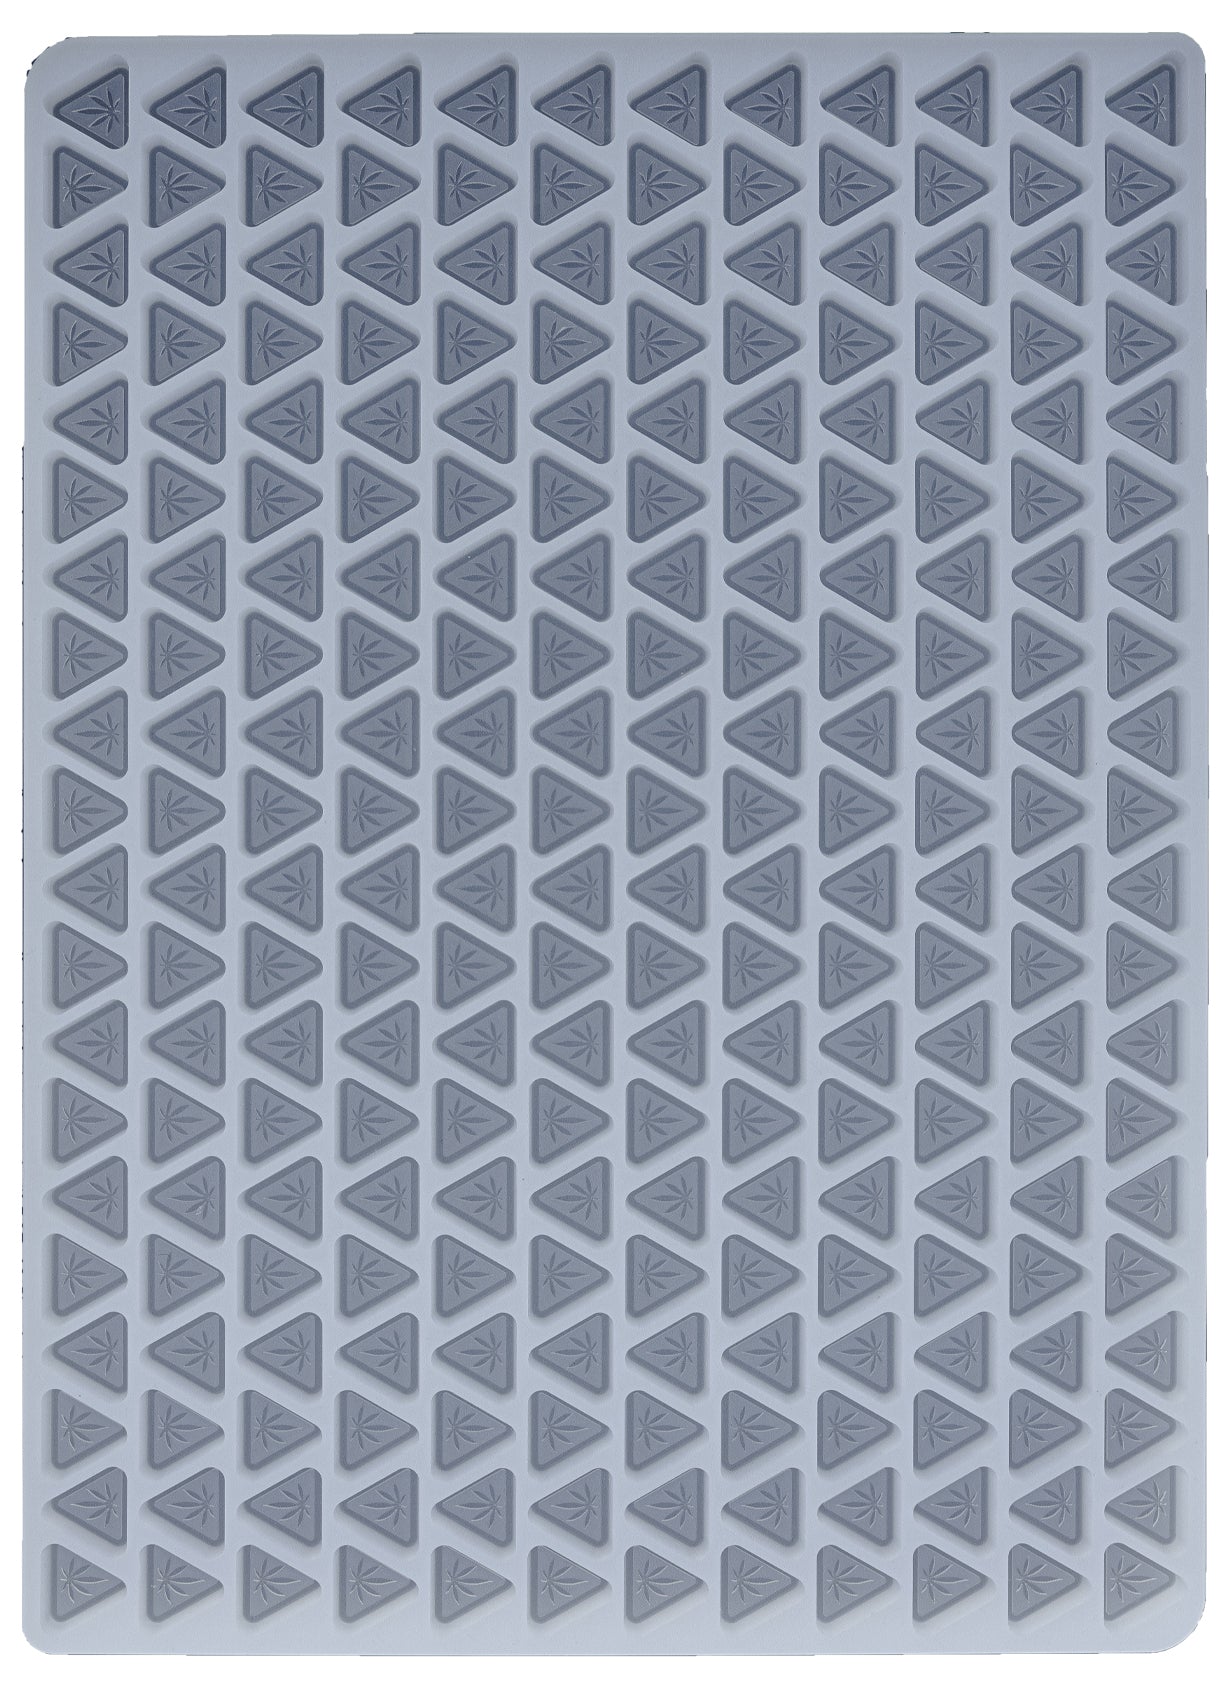 3 mL - New Jersey State THC Logo Mold - Half Sheet - Triangle - 240 Cavity